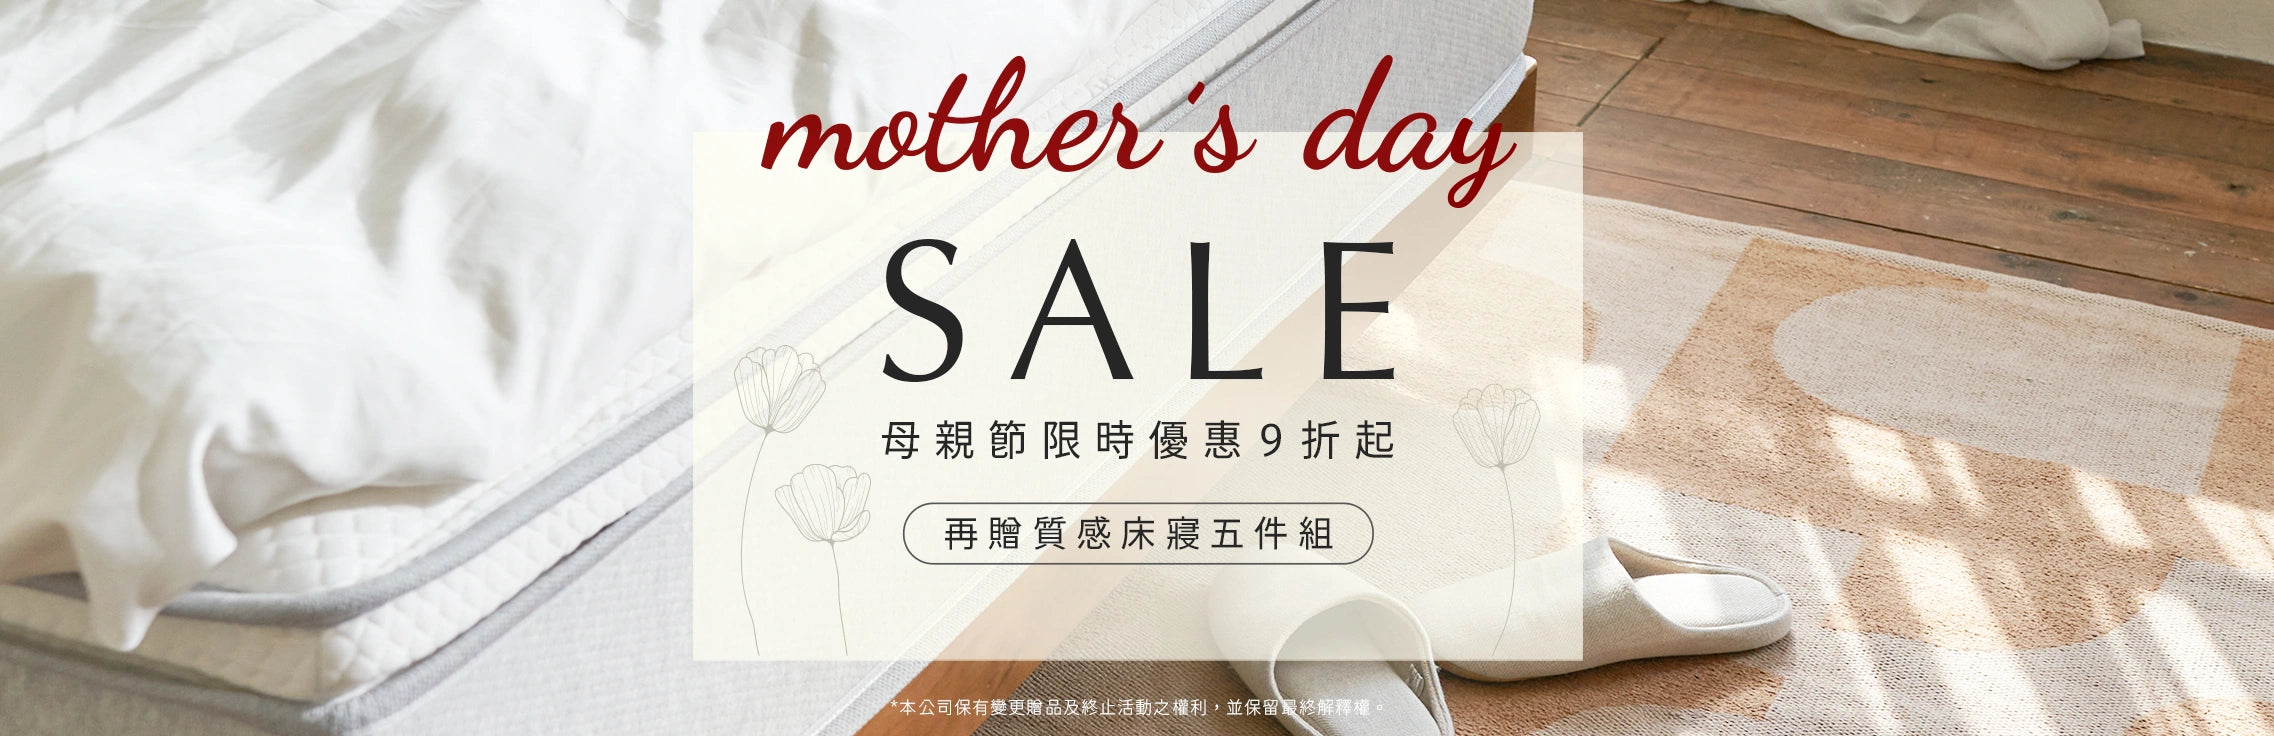 MOTHER'S DAY SALE - 活動主視覺橫幅照片桌機版